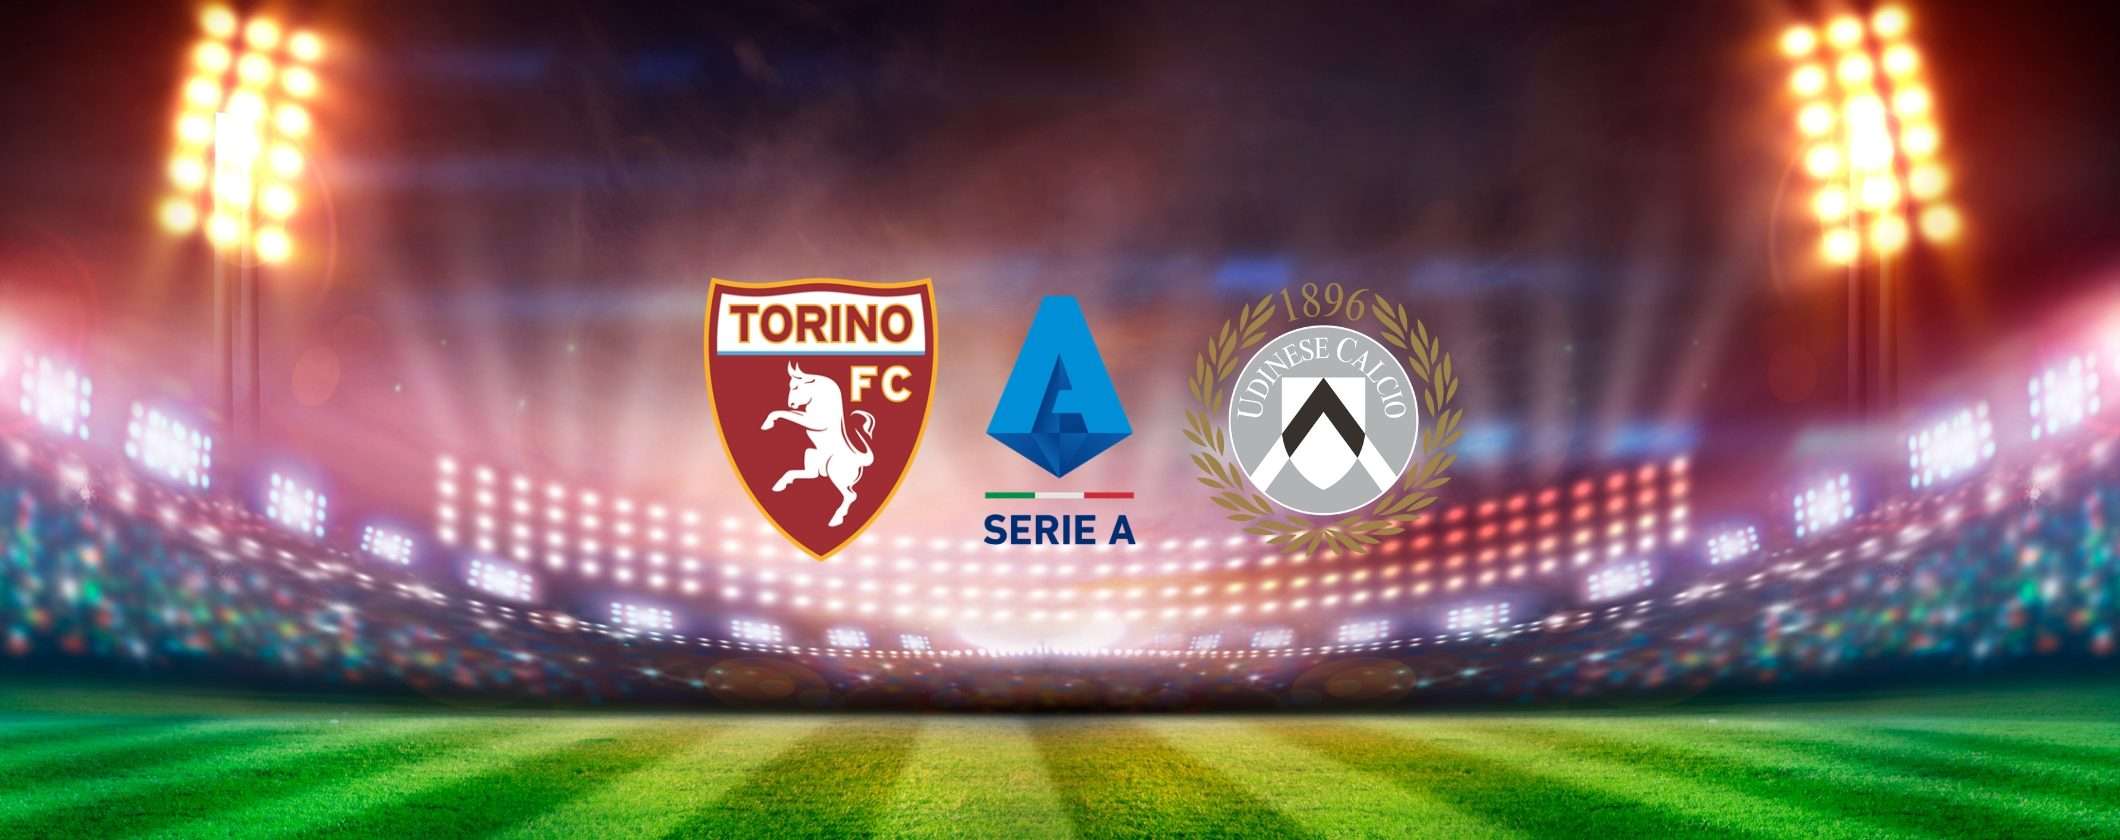 Guada Torino-Udinese in streaming senza limitazioni